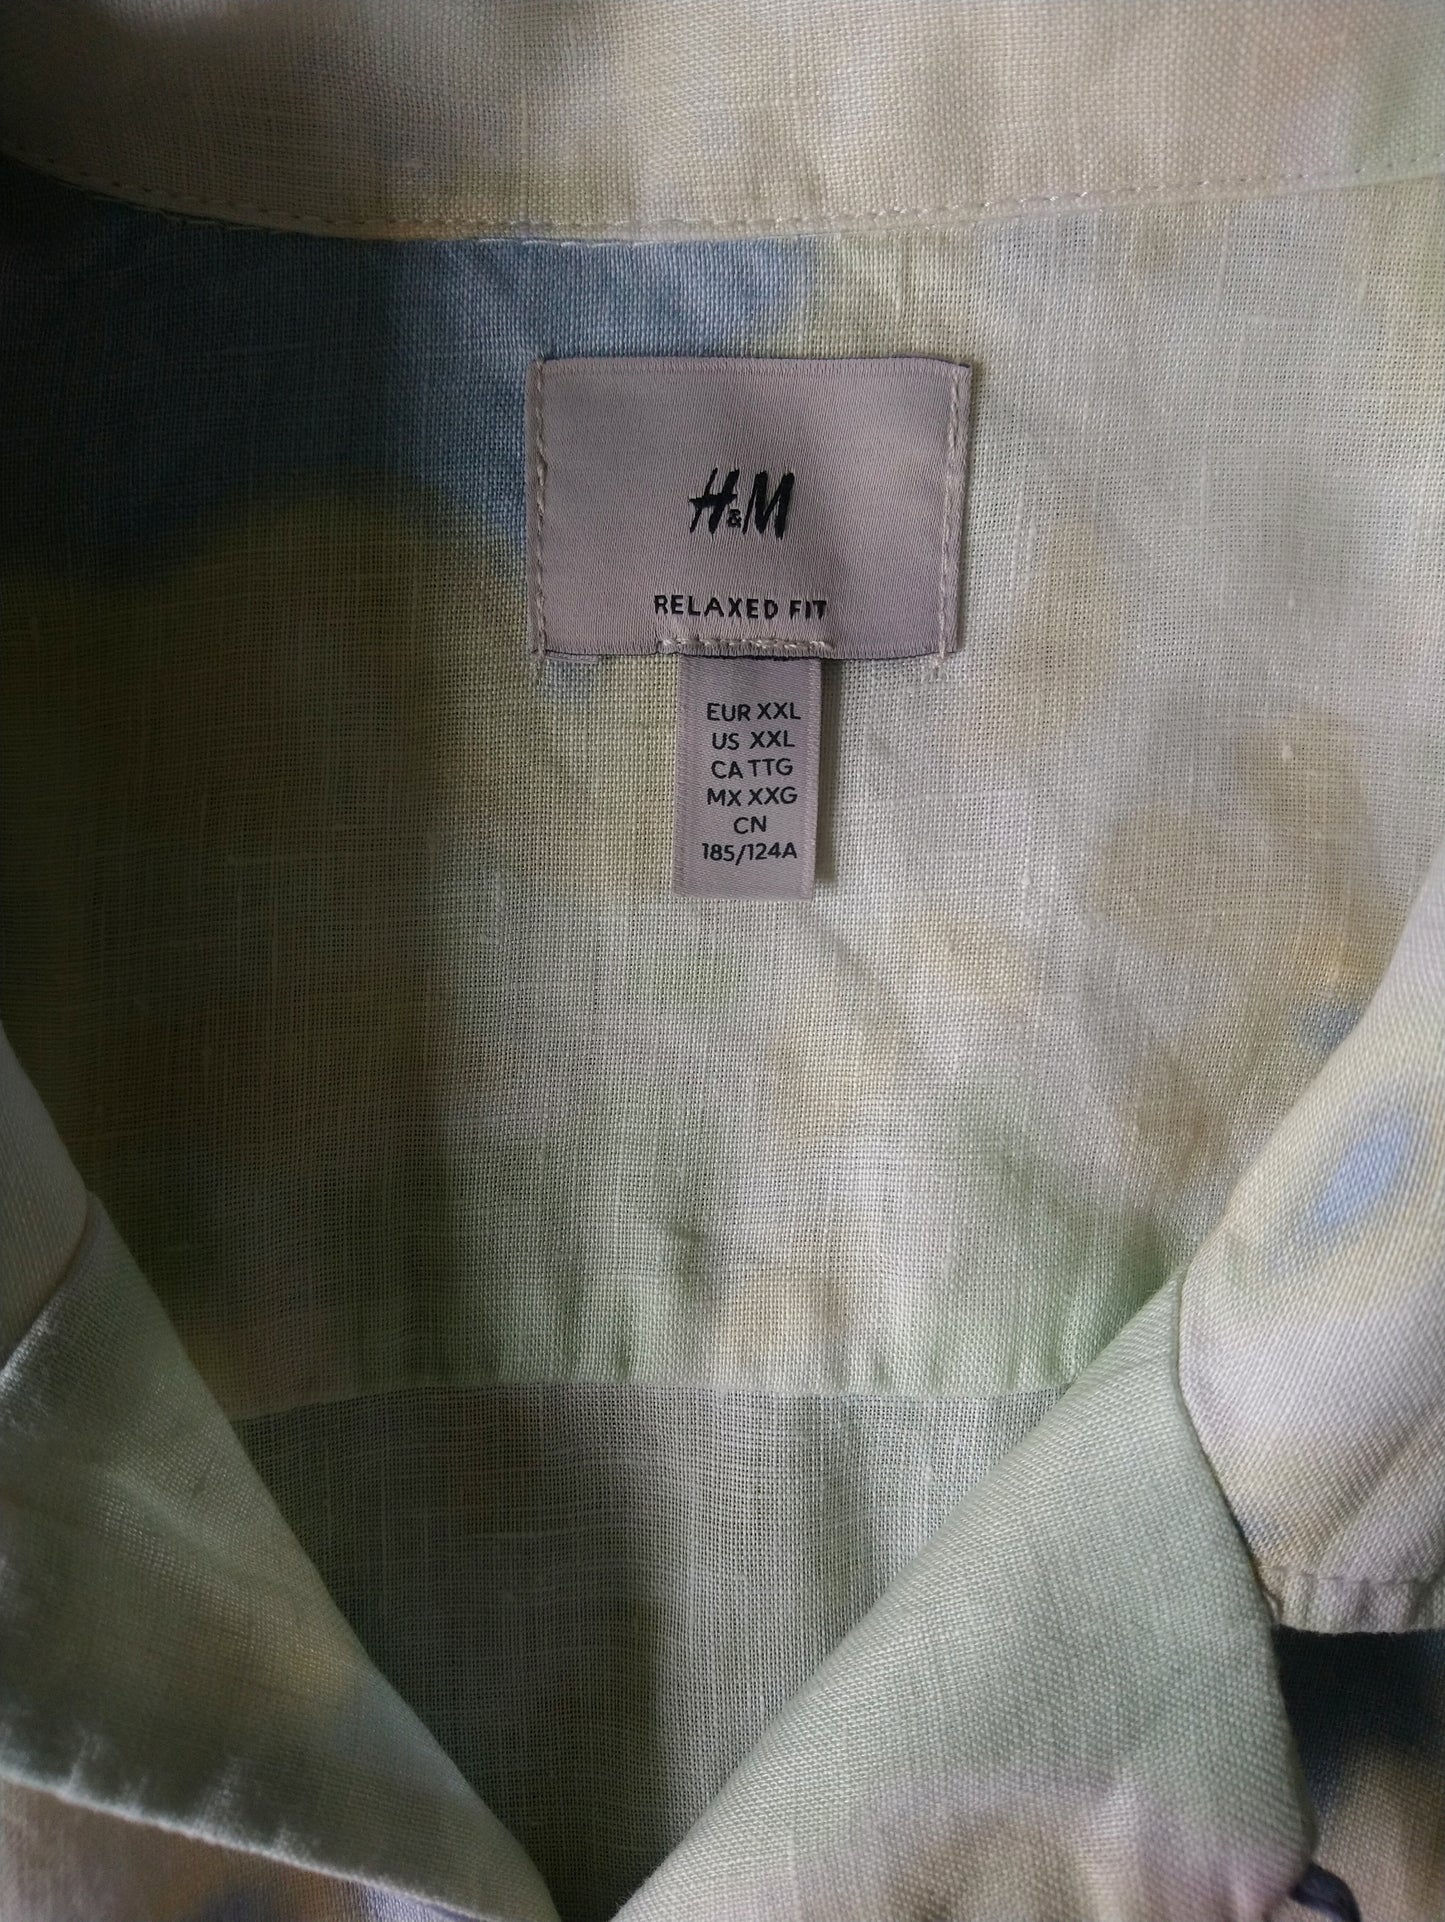 H&M linen shirt short sleeve. Yellow blue green colored. Size 2XL / XXL. Relaxed fit.